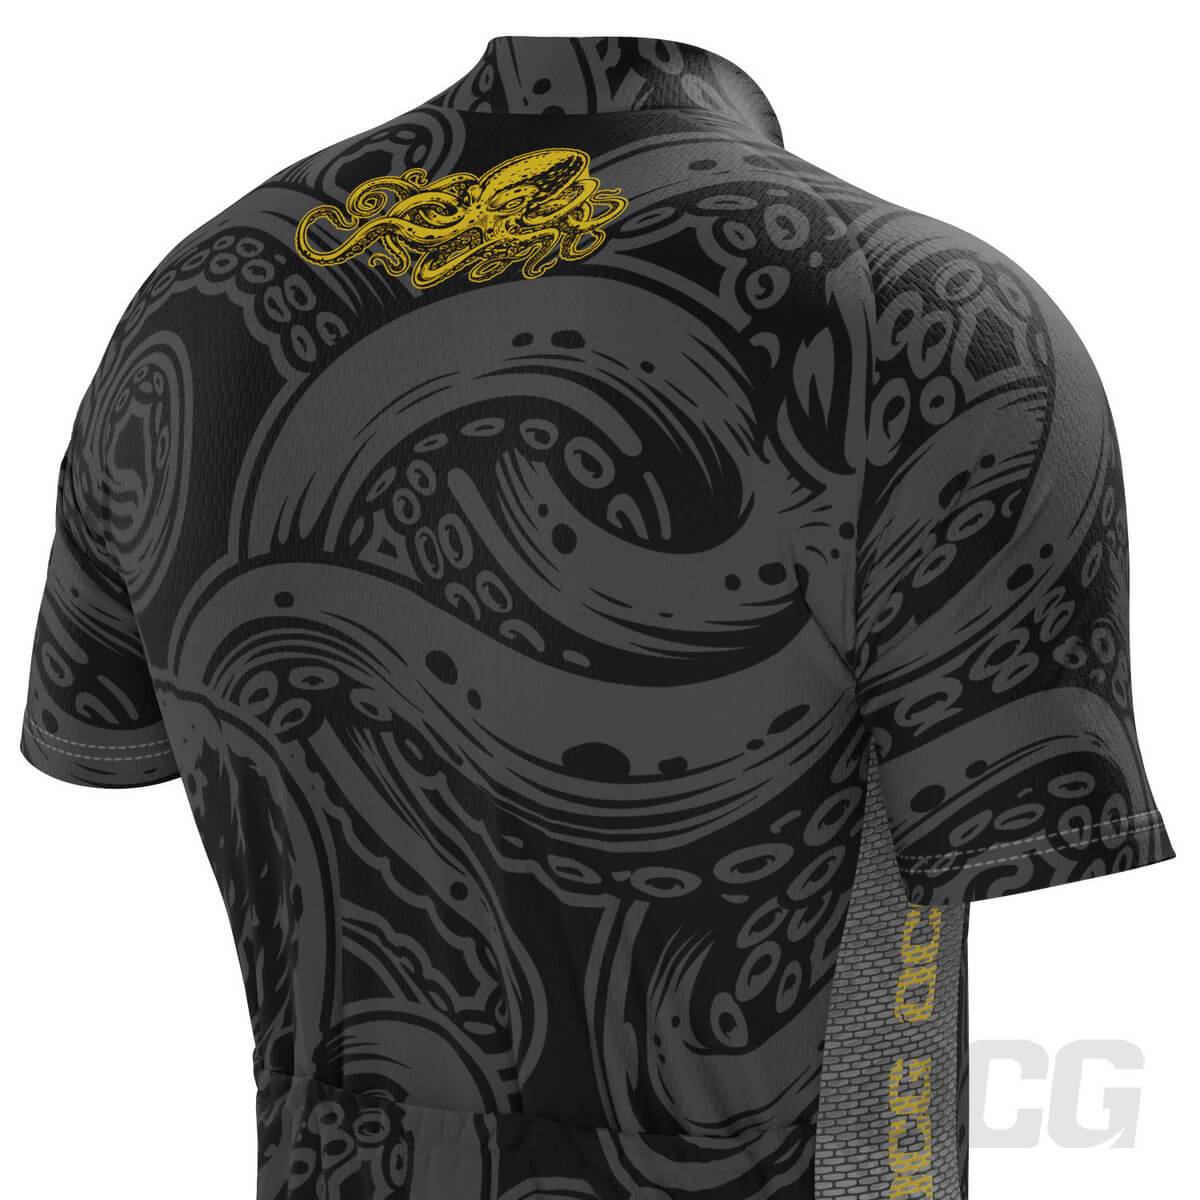 Men's The Black Octopus Short Sleeve Cycling Kit